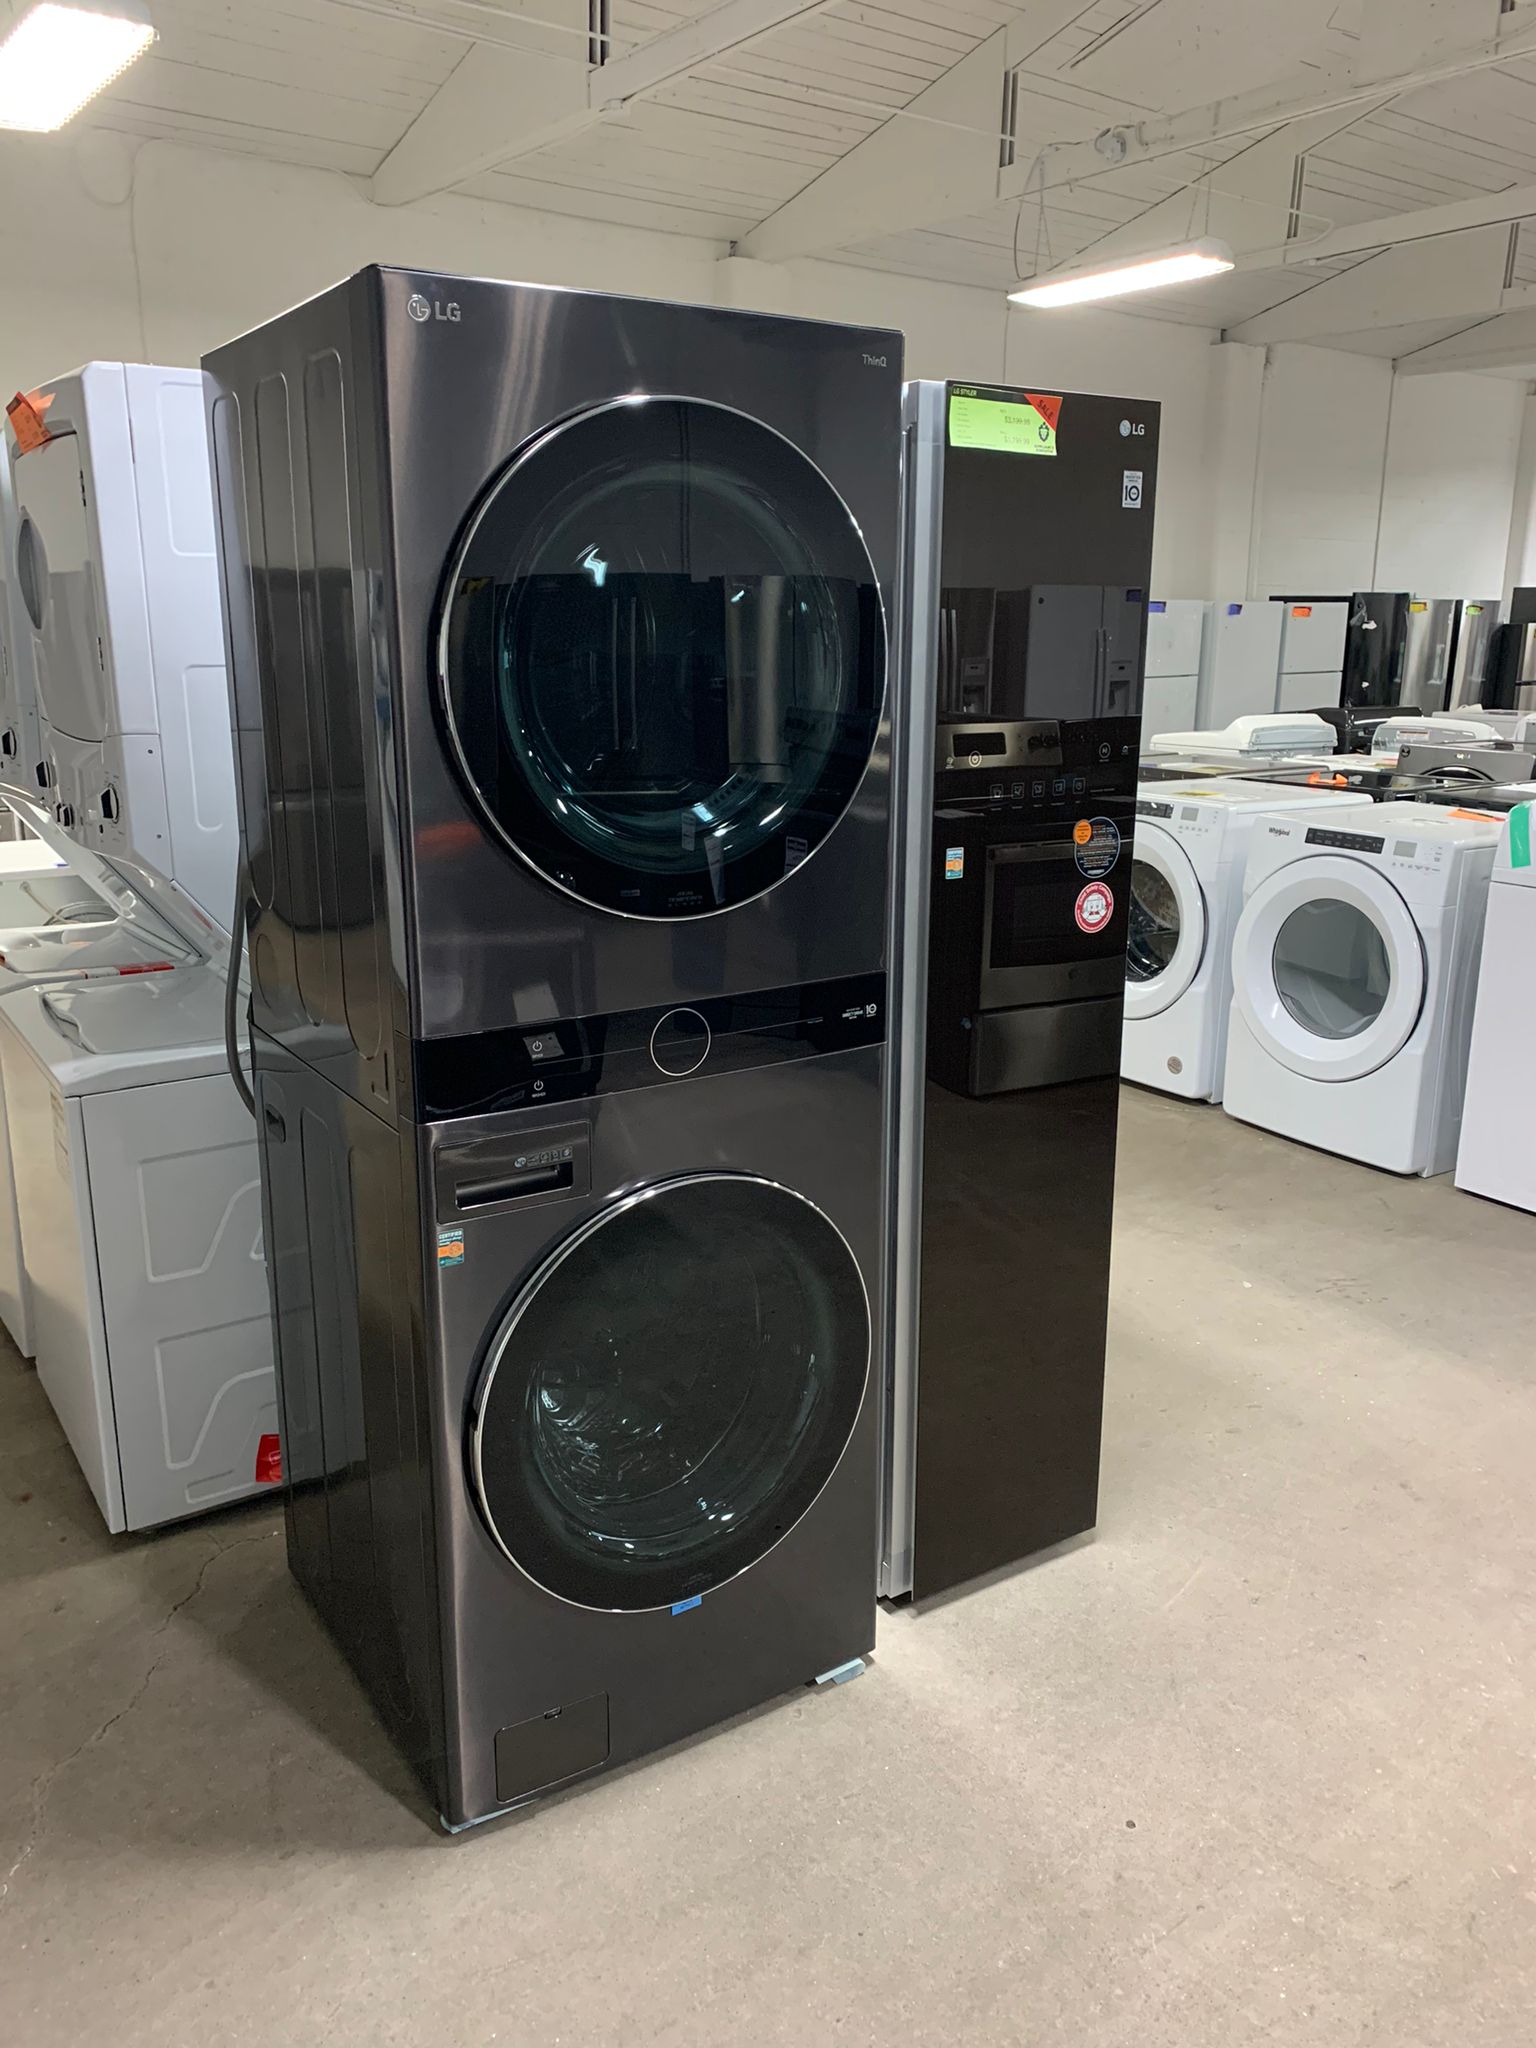 edmonton washer appliances - appliance kingdom